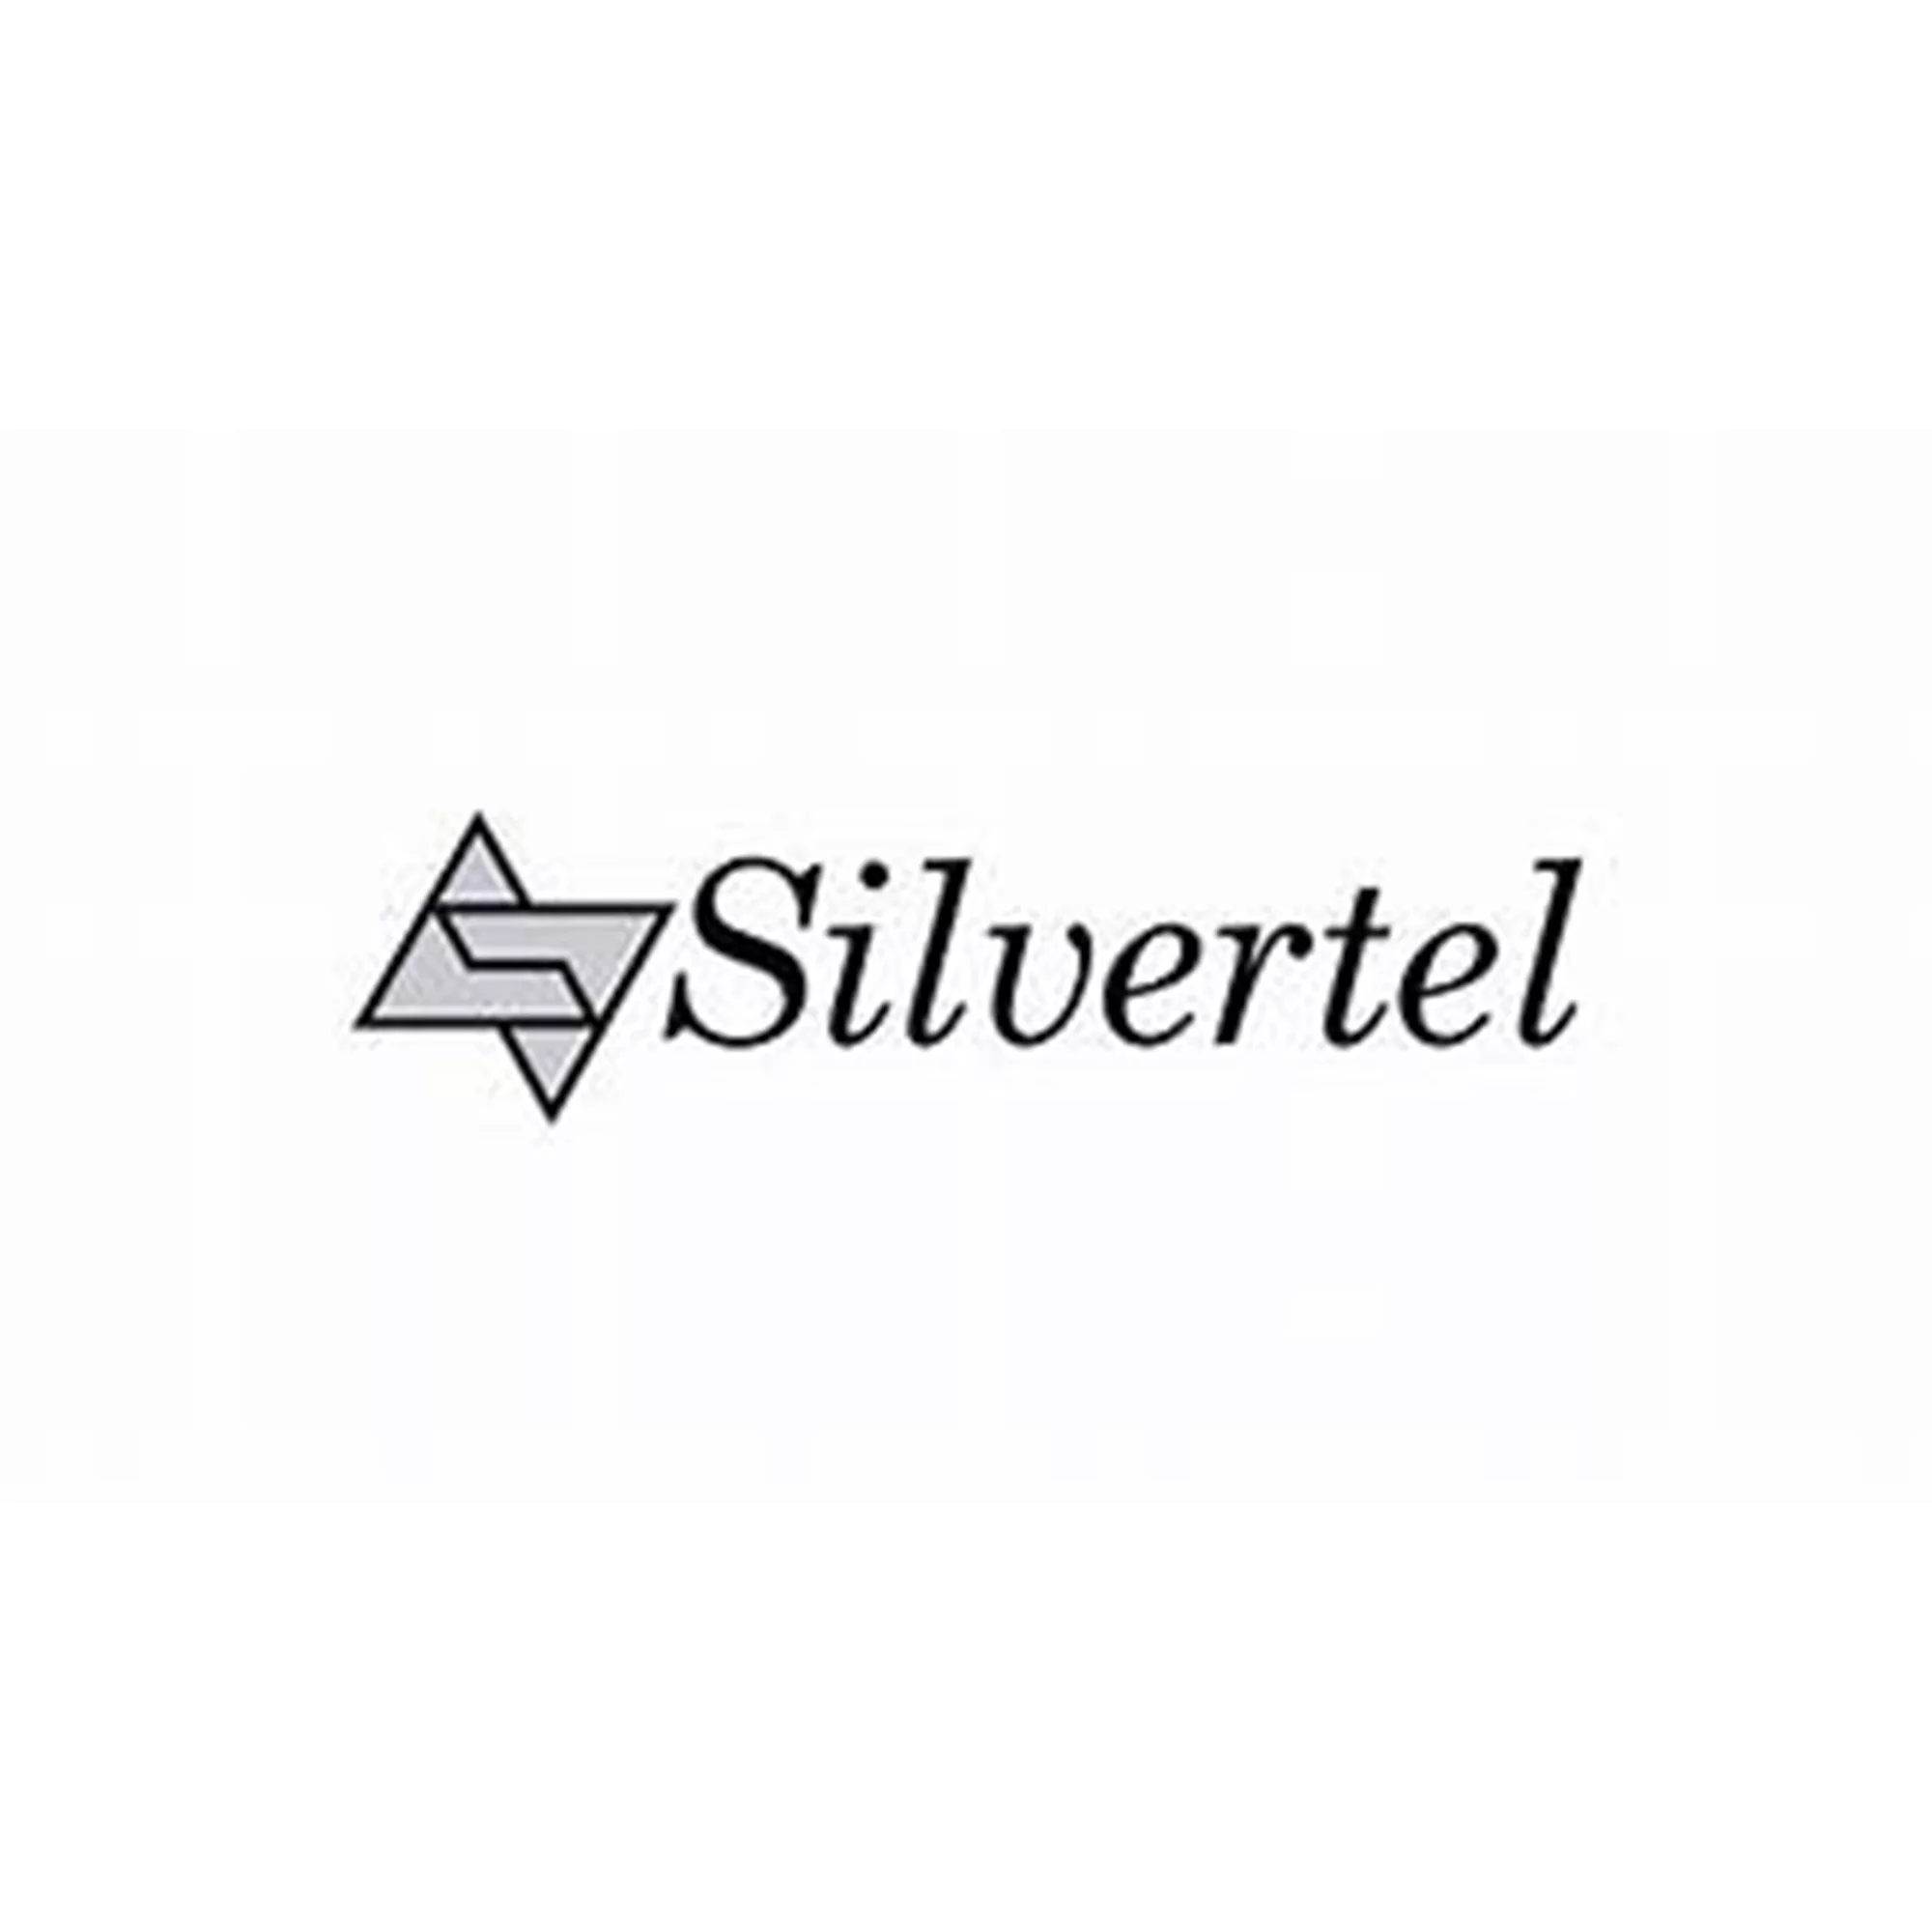 silvertel logo